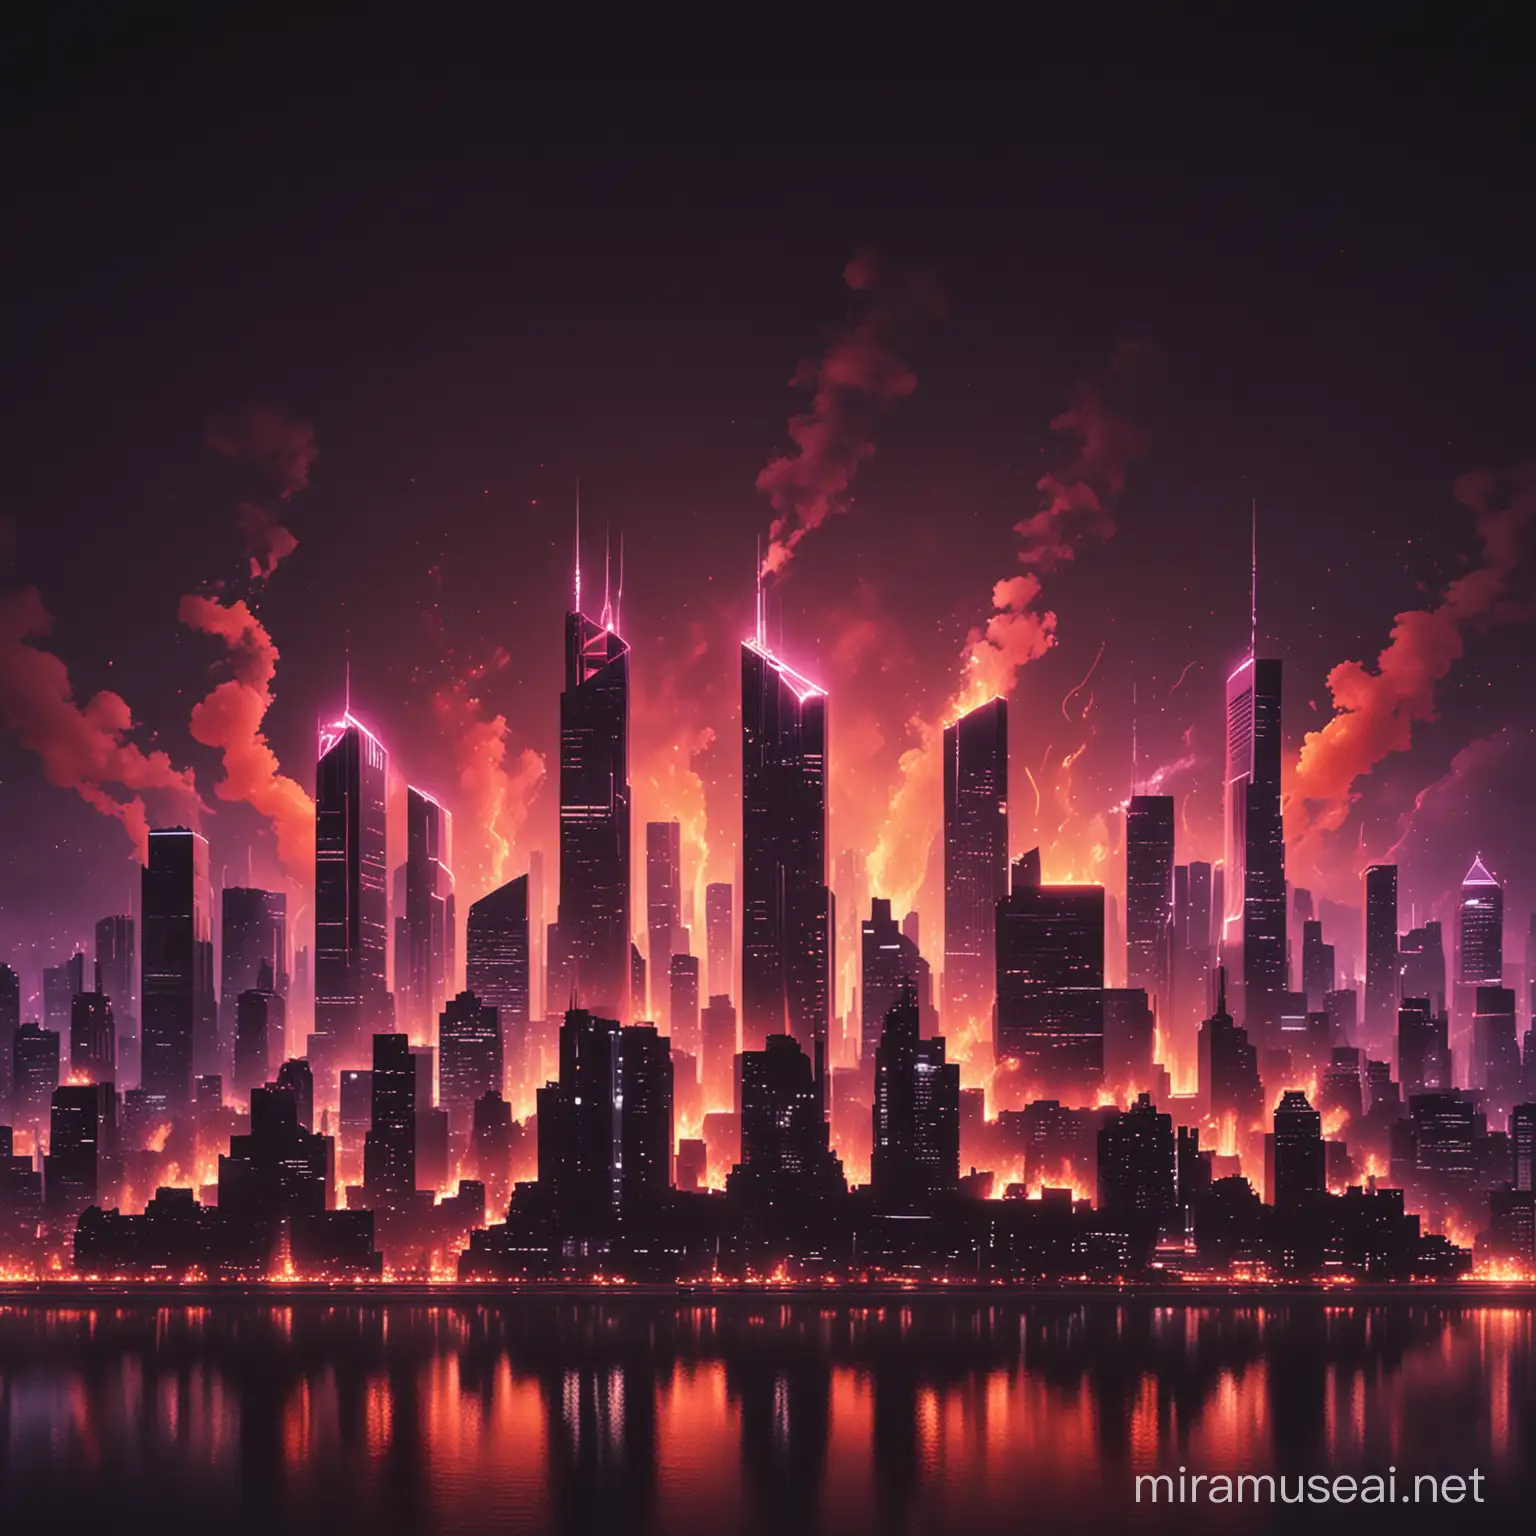 Vibrant Neon City Skyline Illuminated by Cinematic Firelight